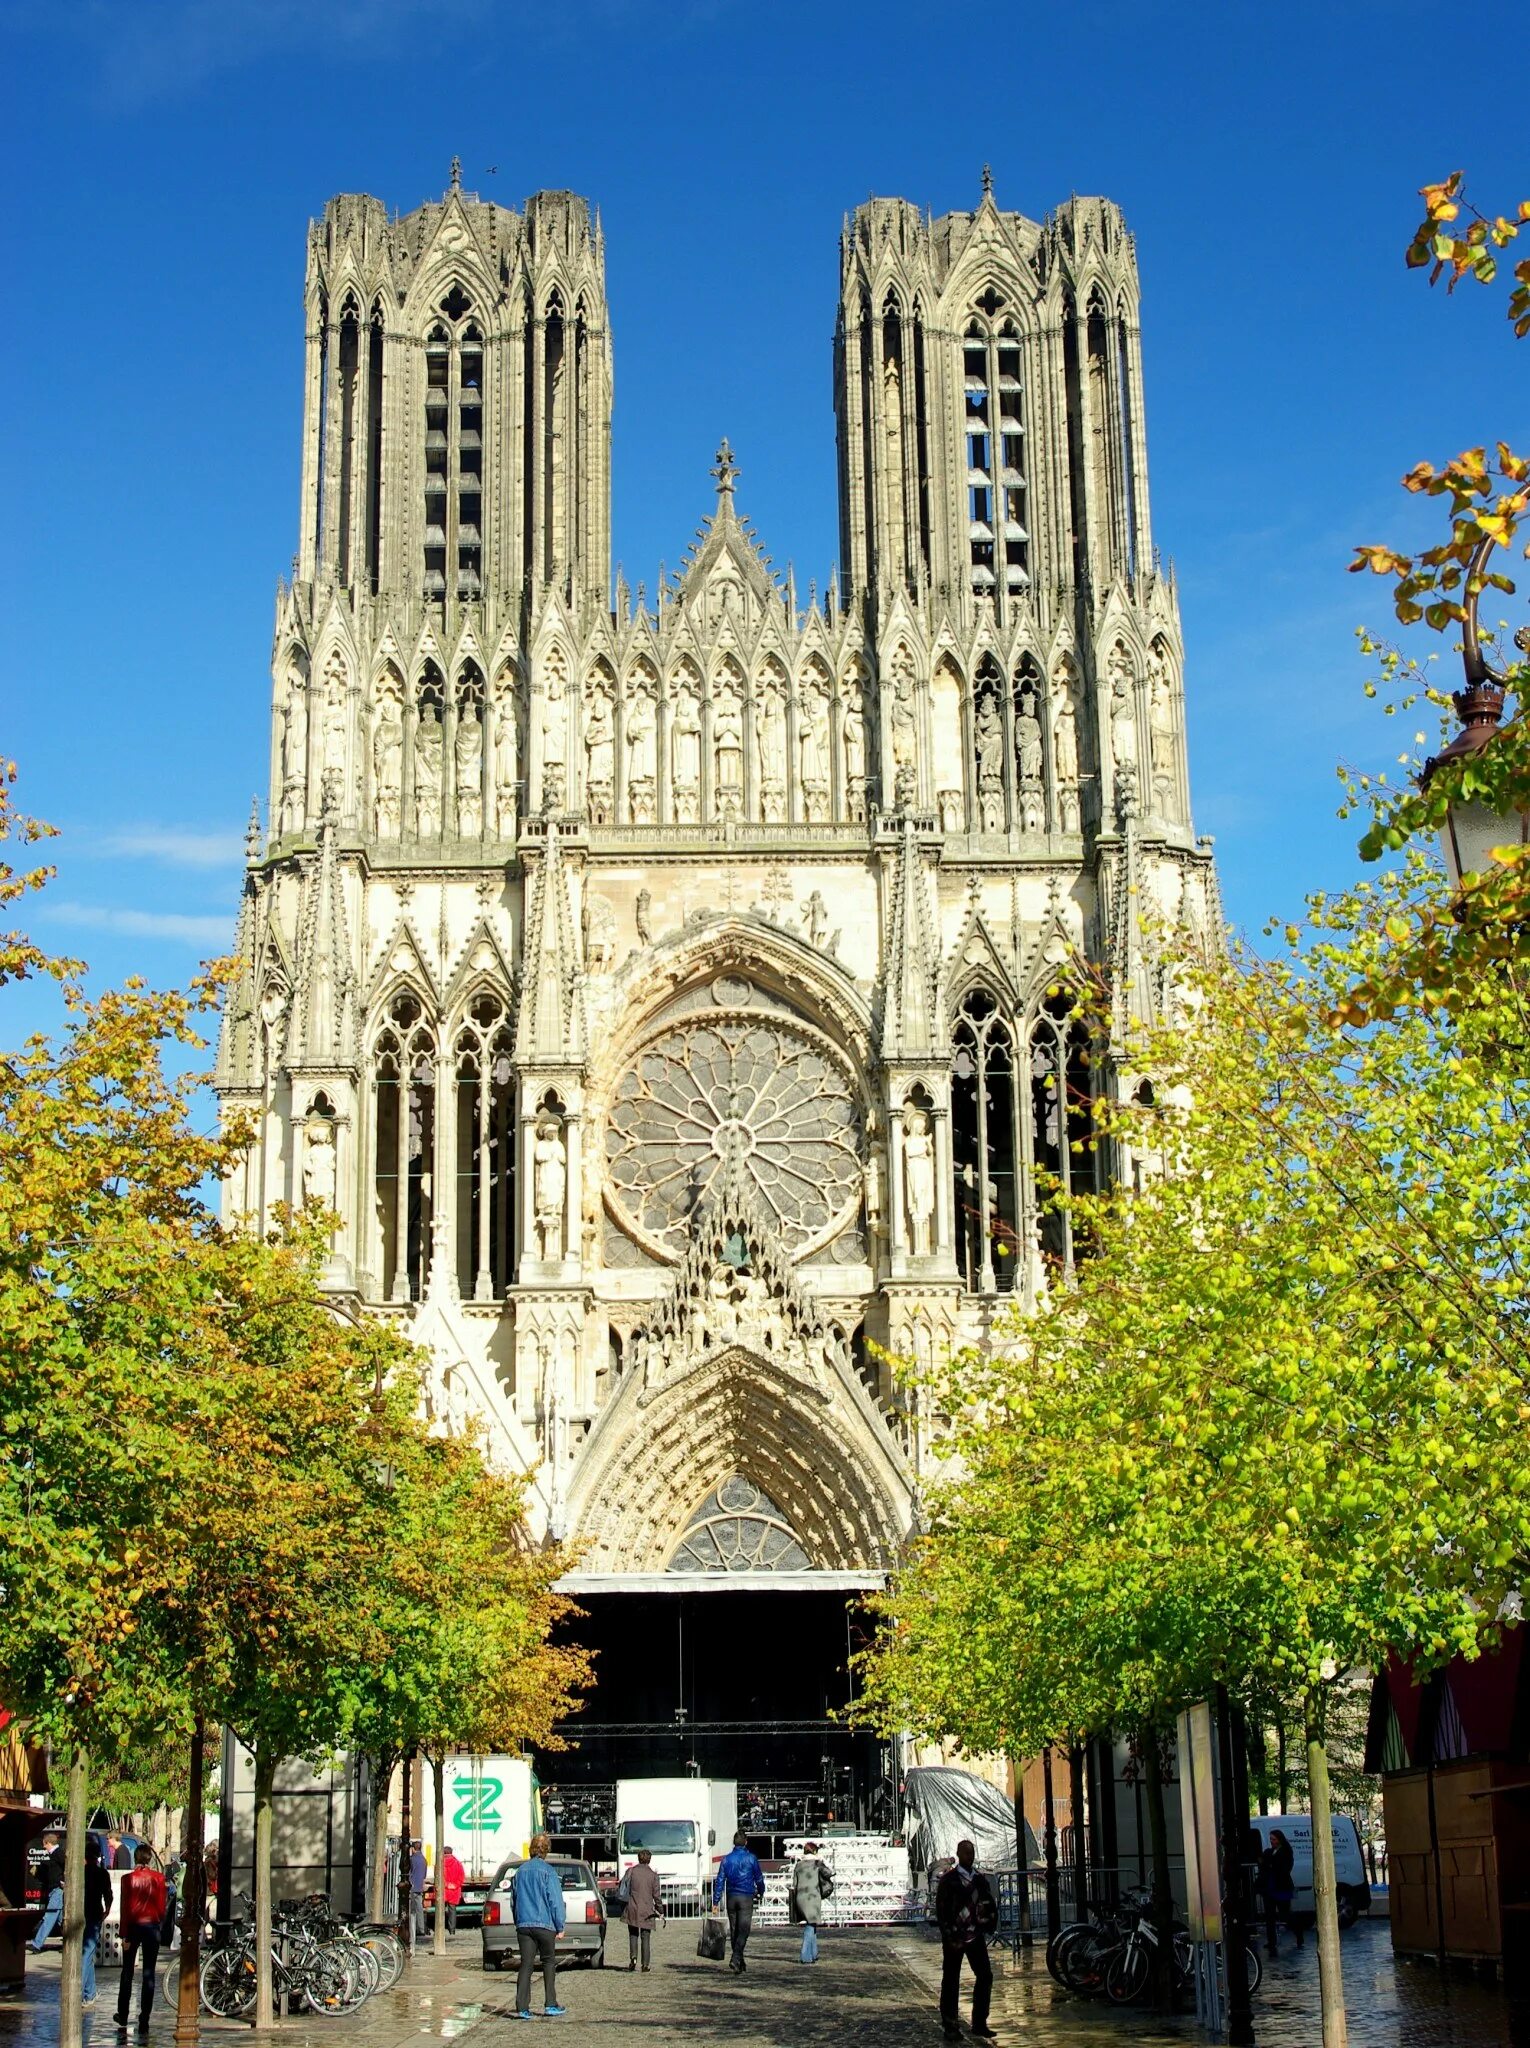 Famous cathedral. Франция, Реймс,Cathedral notre-Dame de Reims. Реймс достопримечательности. Готическая архитектура Франции.